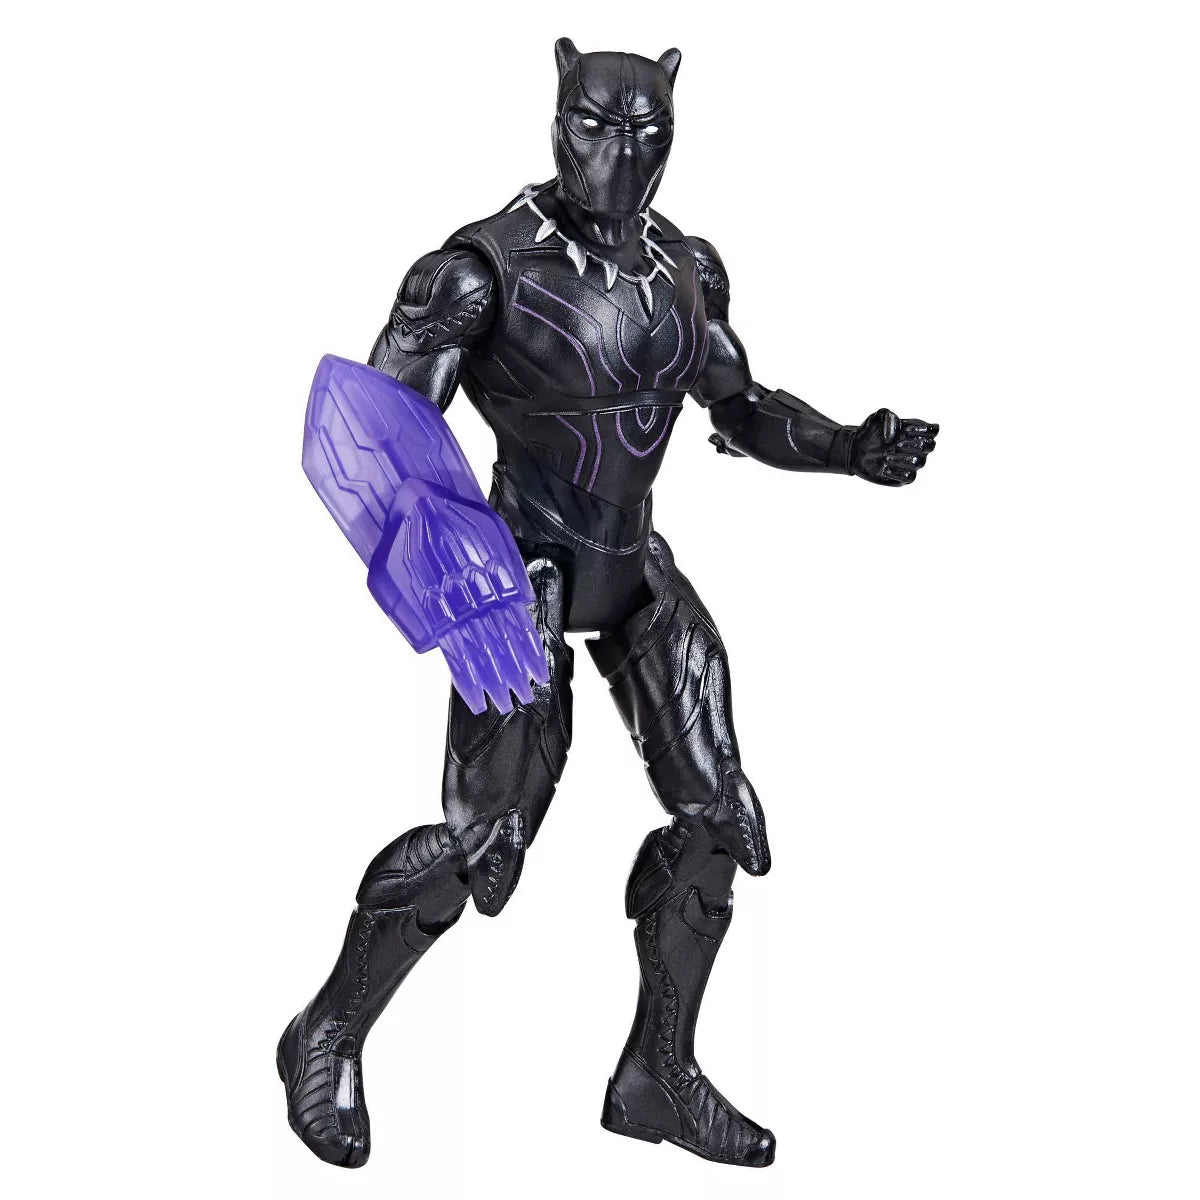 Marvel Avengers Black Panther 10cm Action Figure